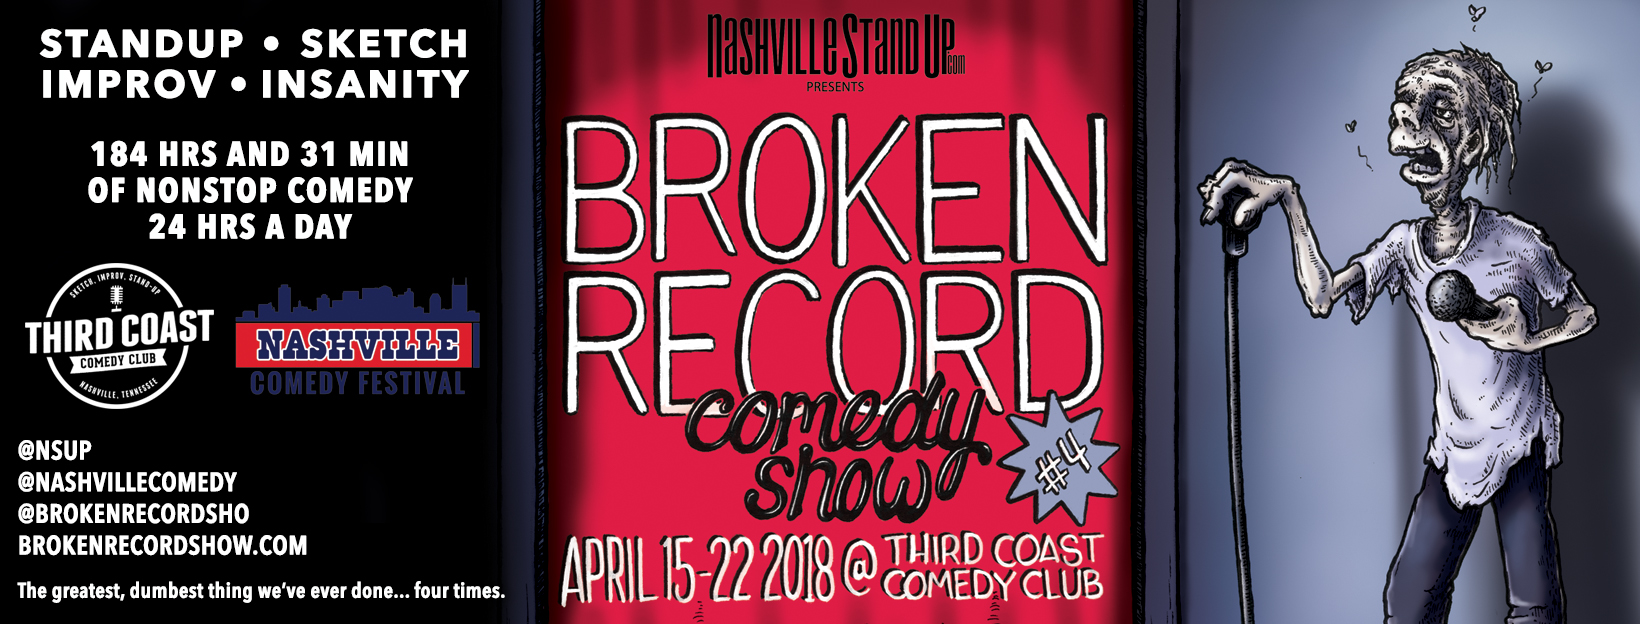 #BrokenRecordShow 4 - April 15-22, 2018 at Third Coast Comedy Club. Original poster art by Carden Illustration!